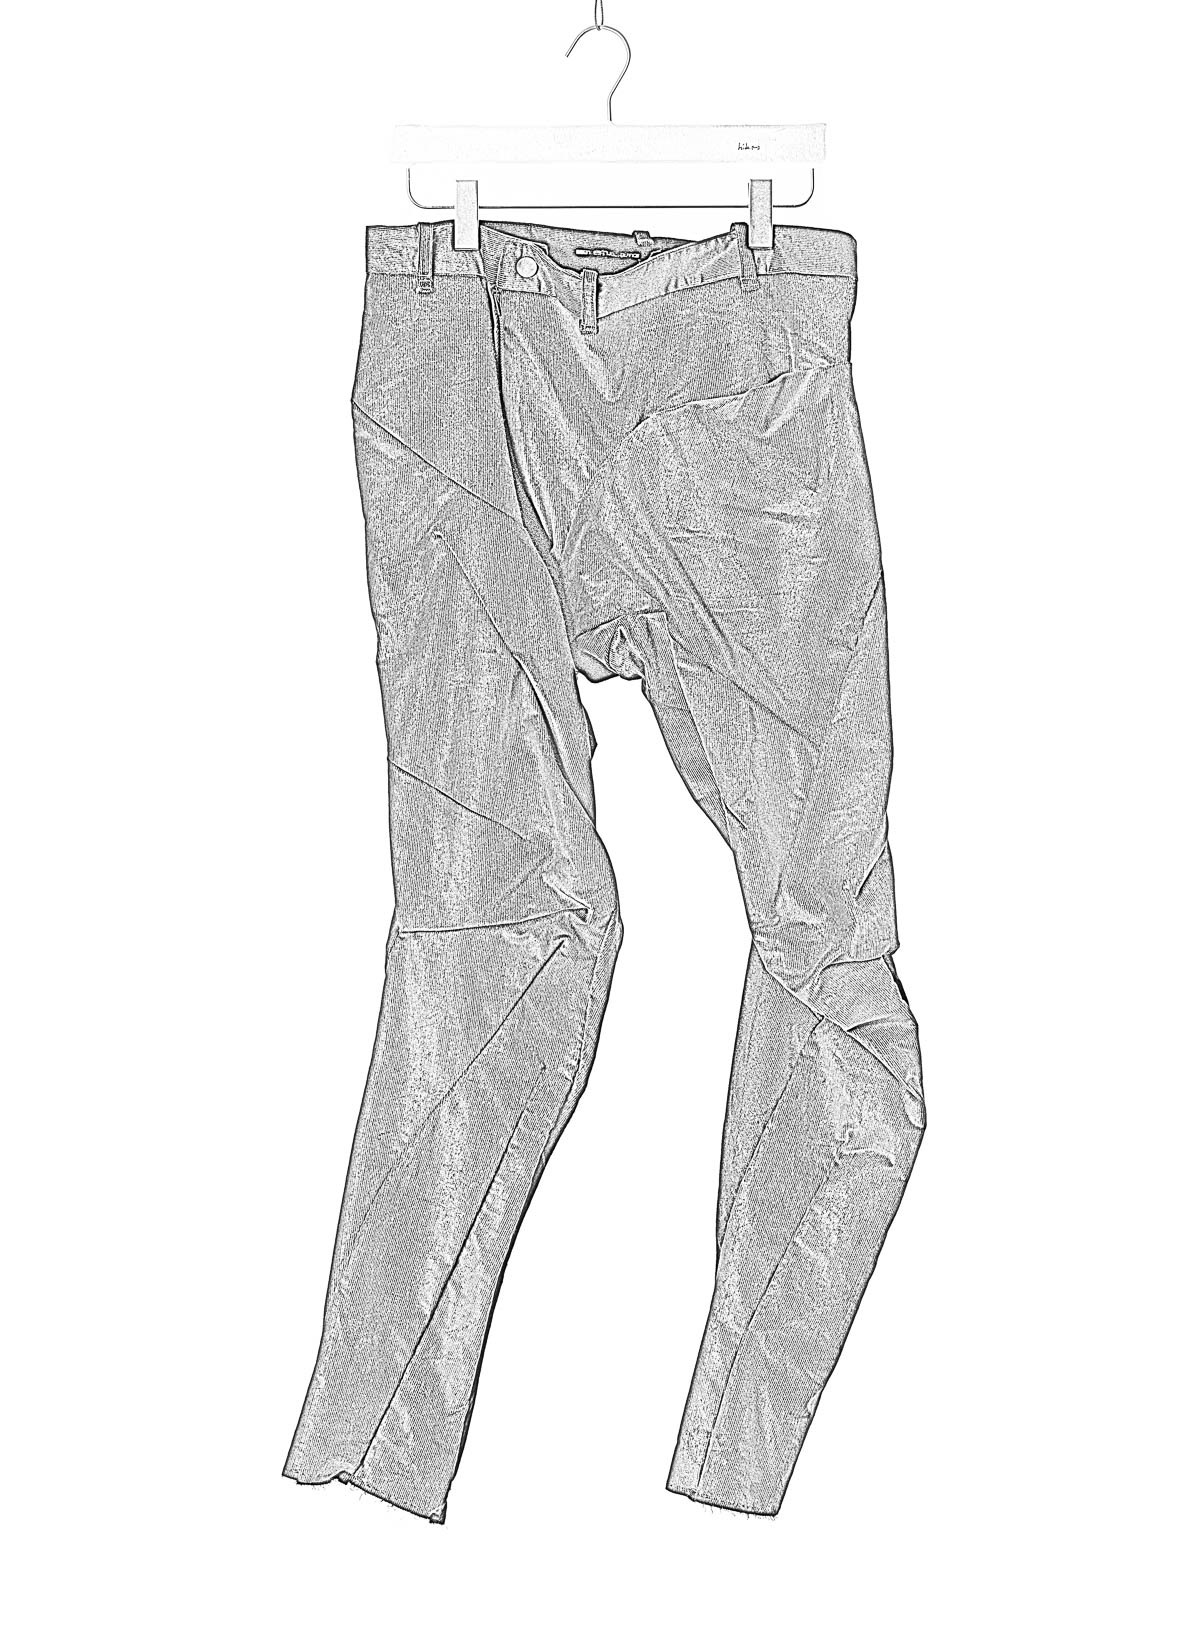 hide-m | LEON EMANUEL BLANCK Distortion Fitted Pants, black cord